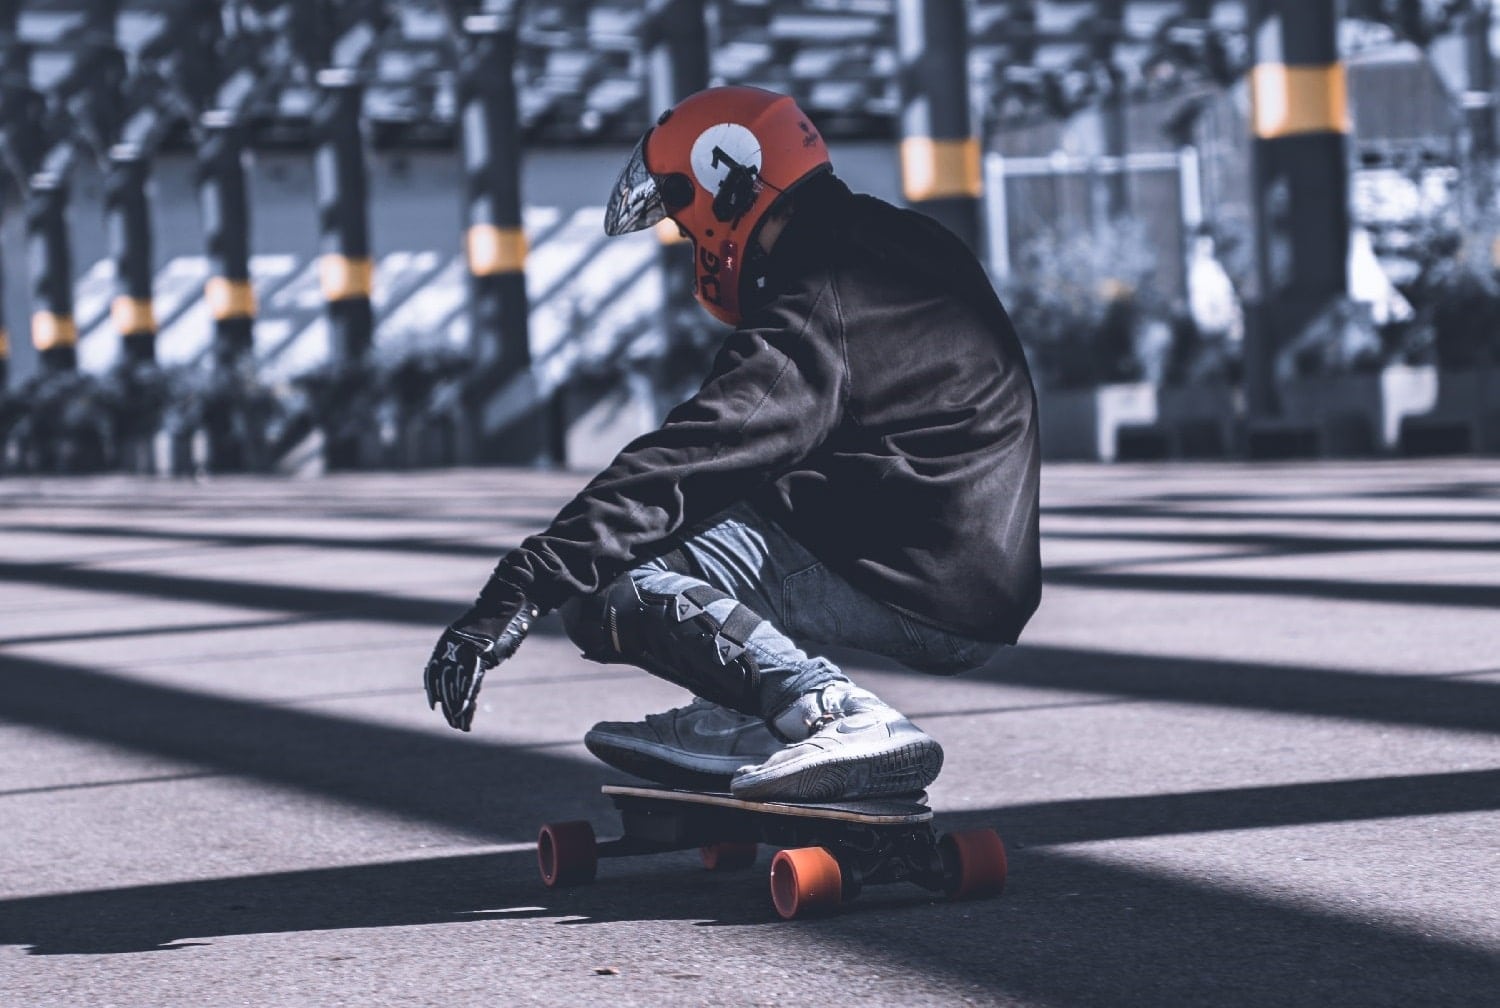 Electric Skateboard Versus Onewheel